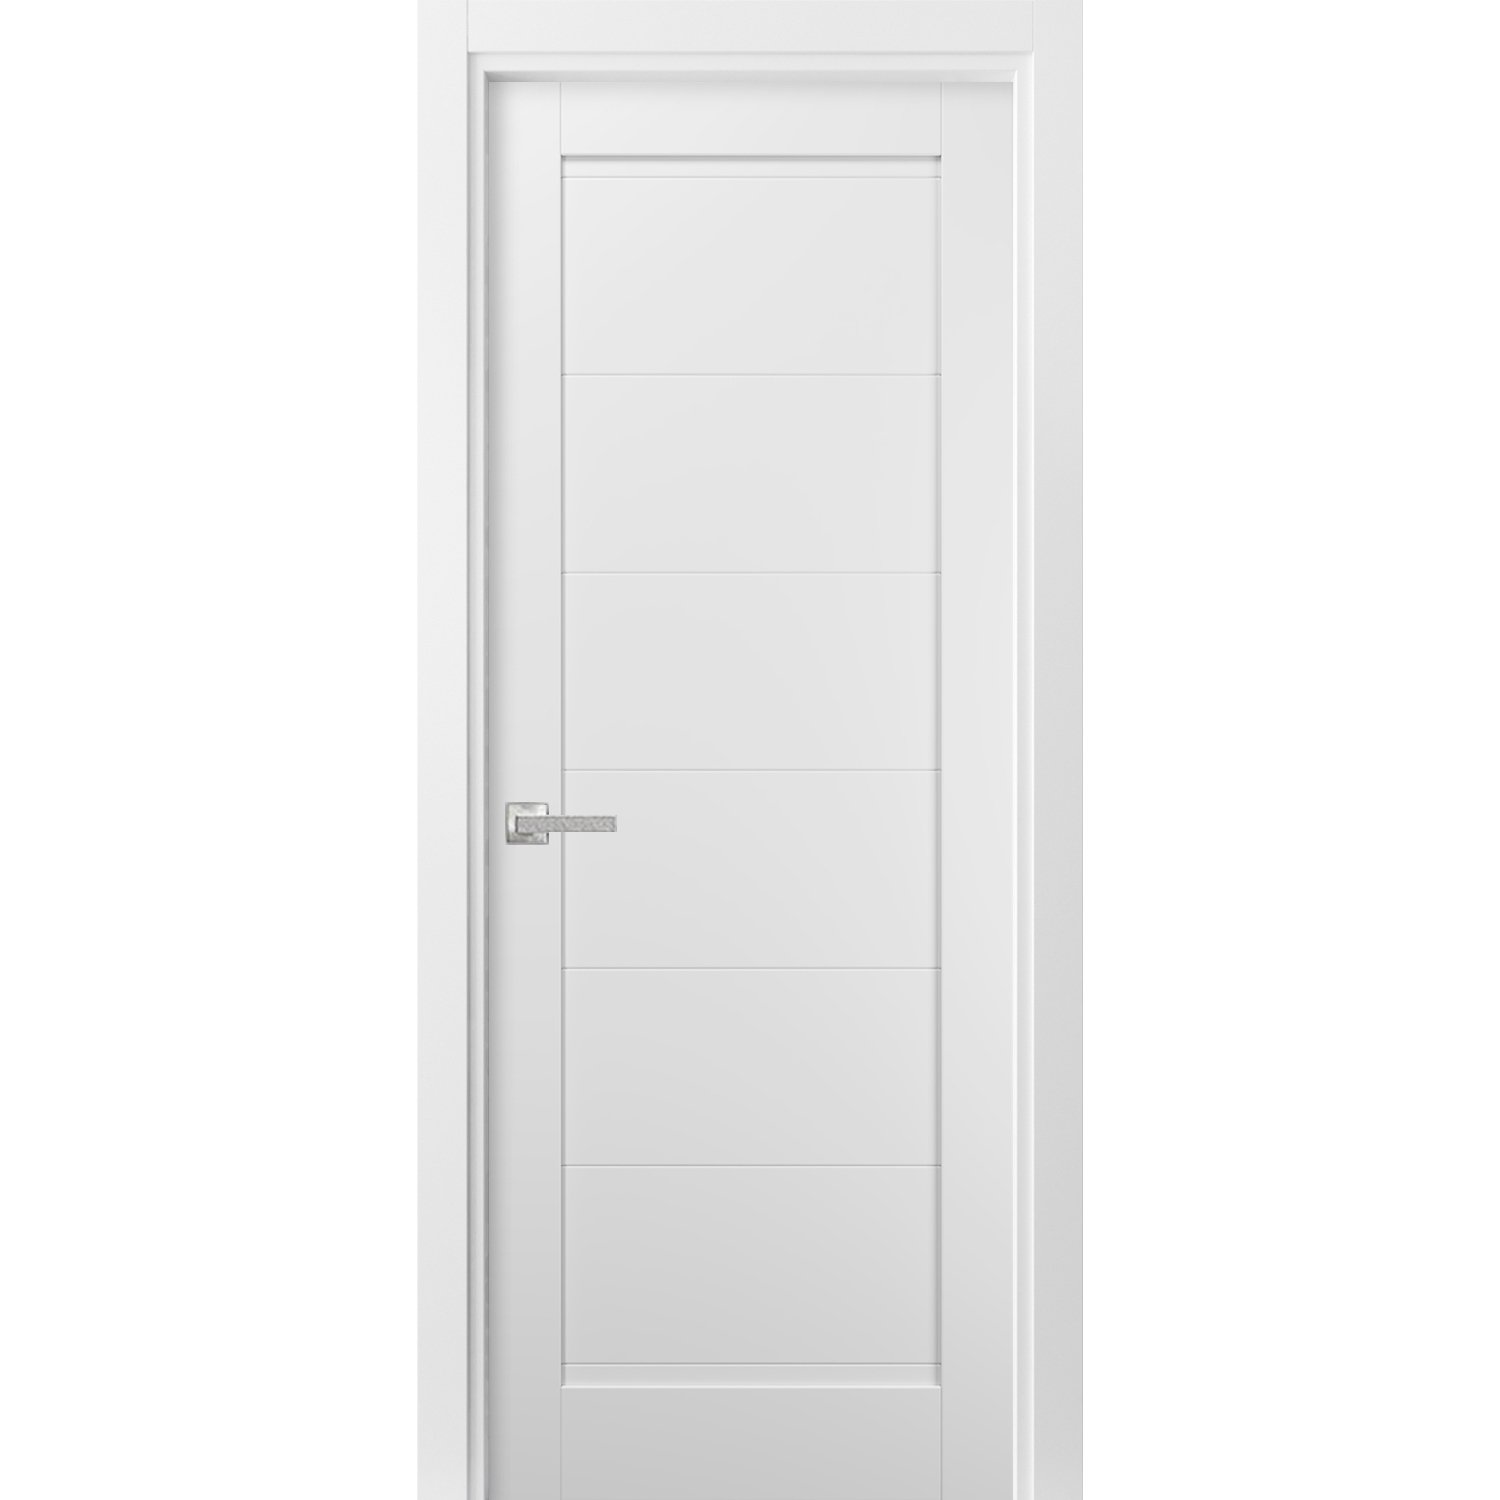 Pantry Kitchen Door with Hardware | Quadro 4115 White Silk | Single Panel Frame Trims | Bathroom Bedroom Sturdy Doors 